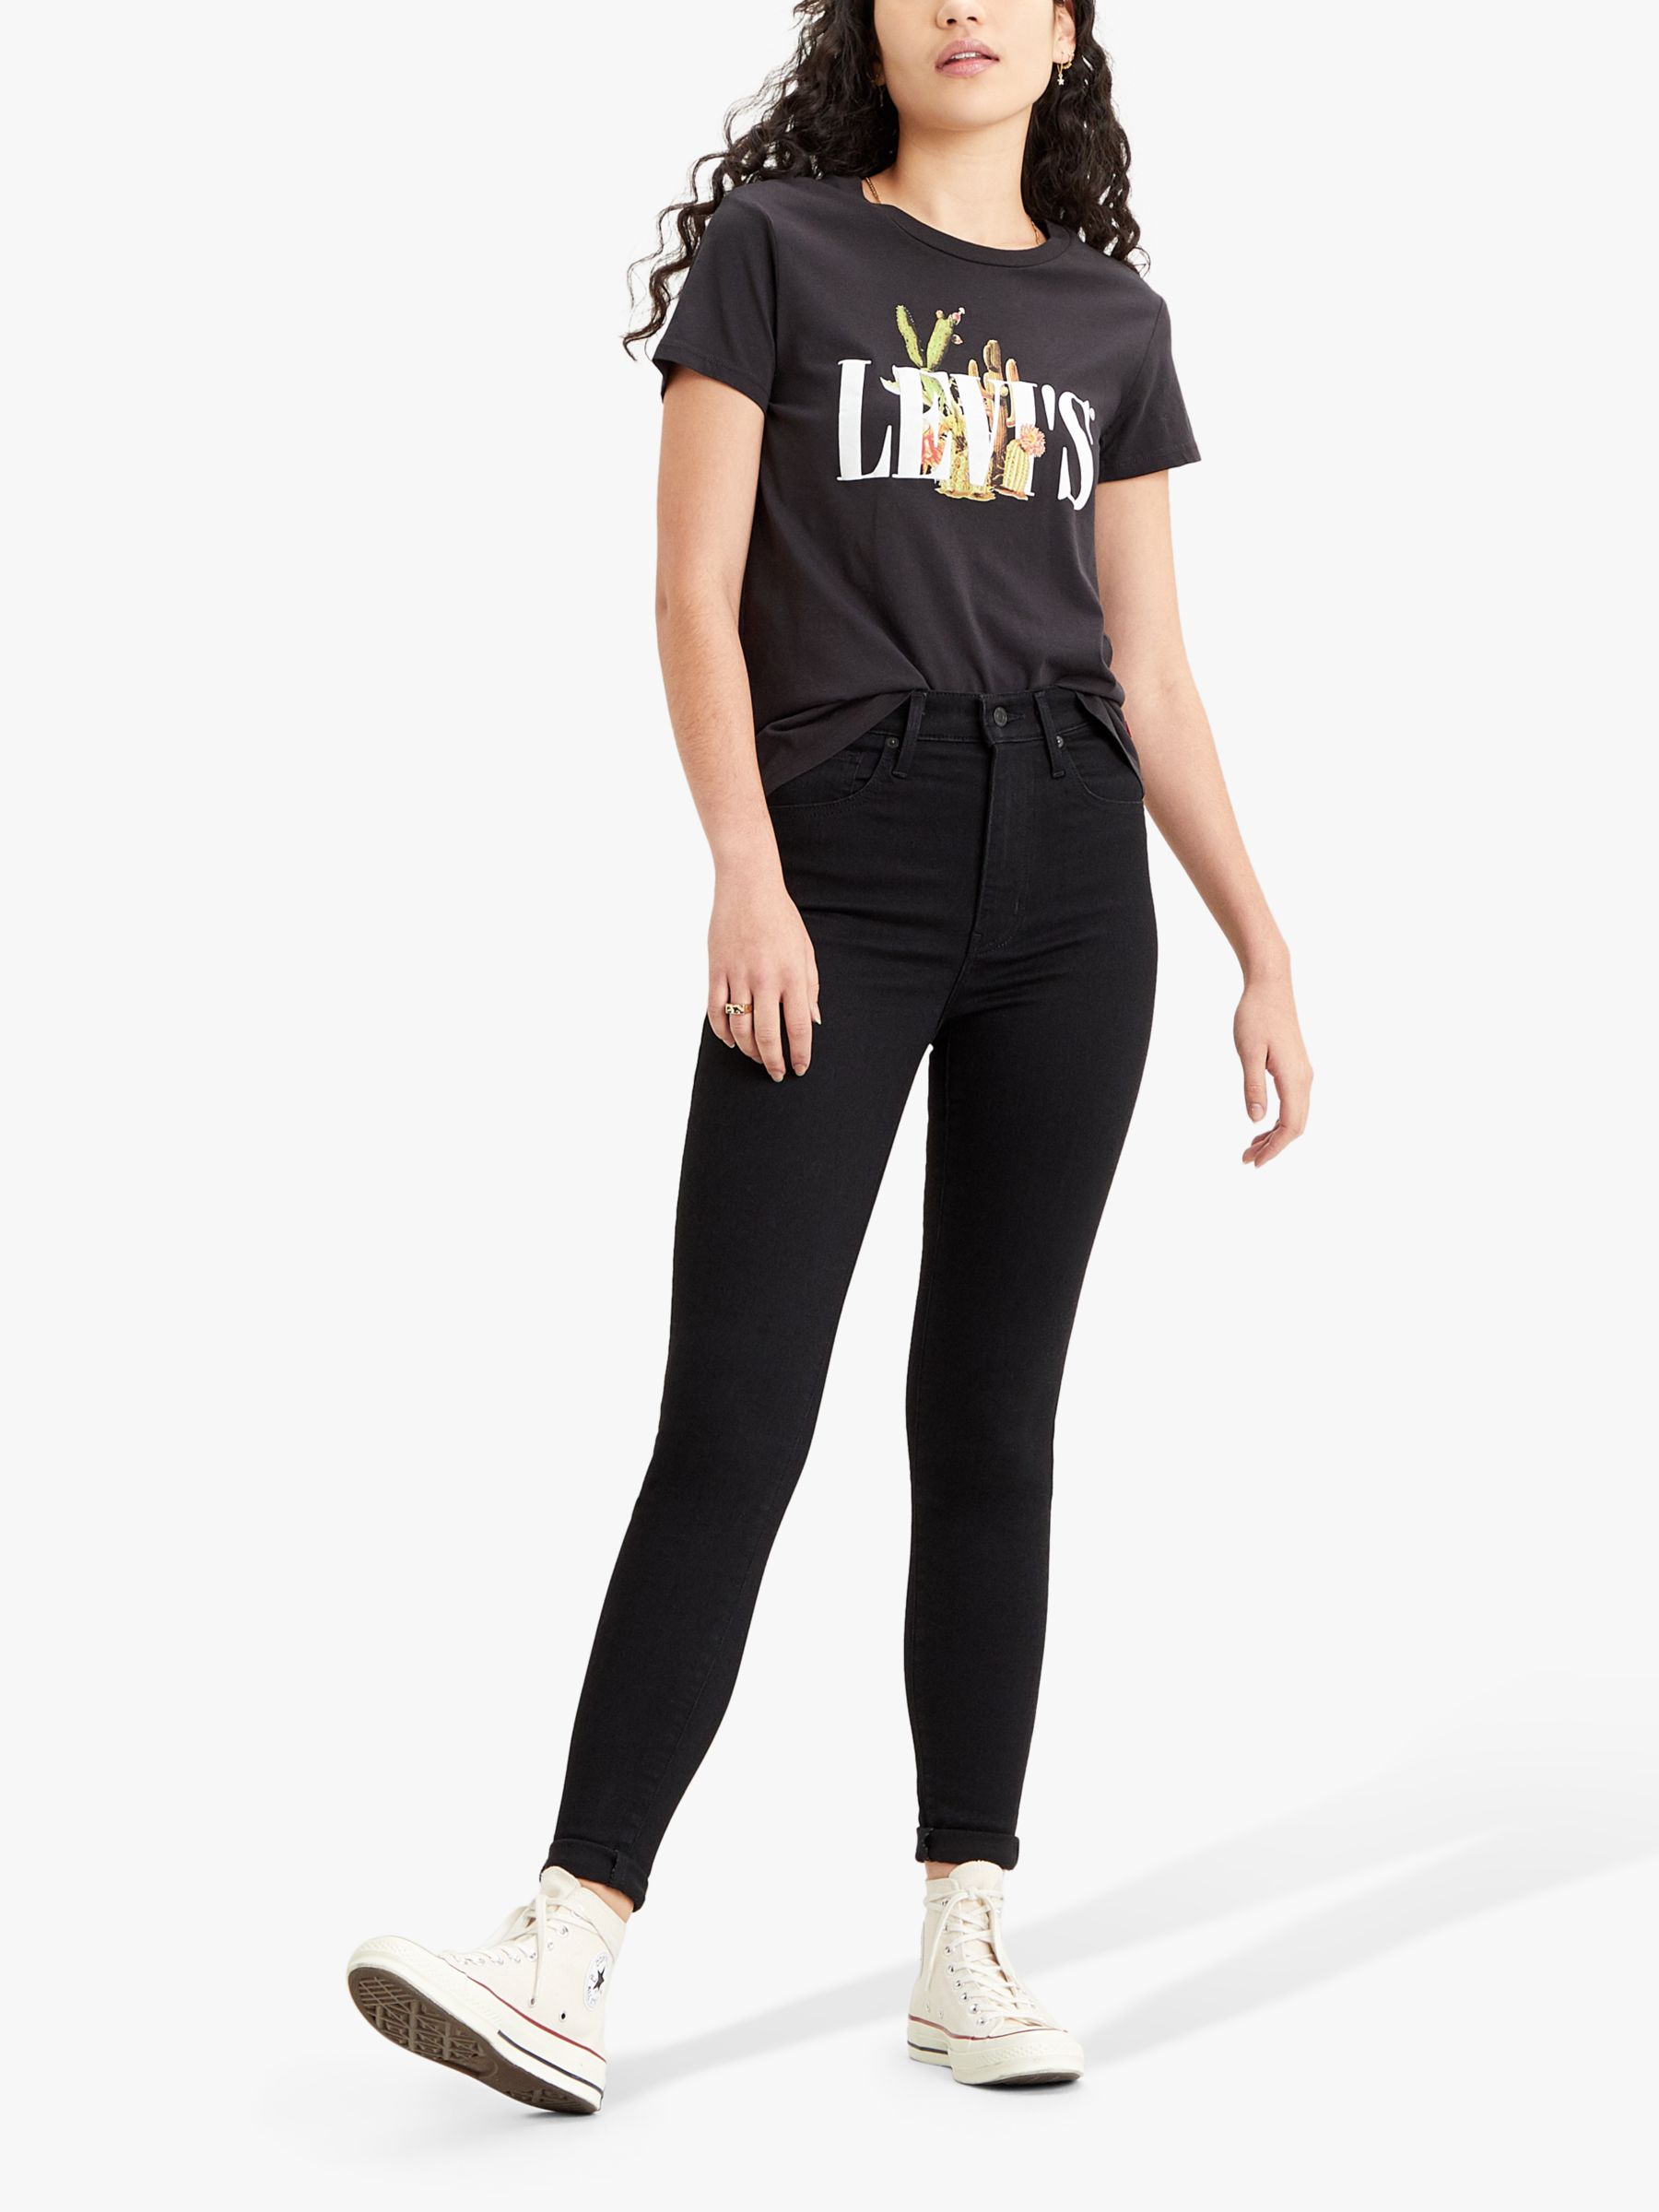 Levi's Mile High Super Skinny Jeans, Celestial, W24/L30